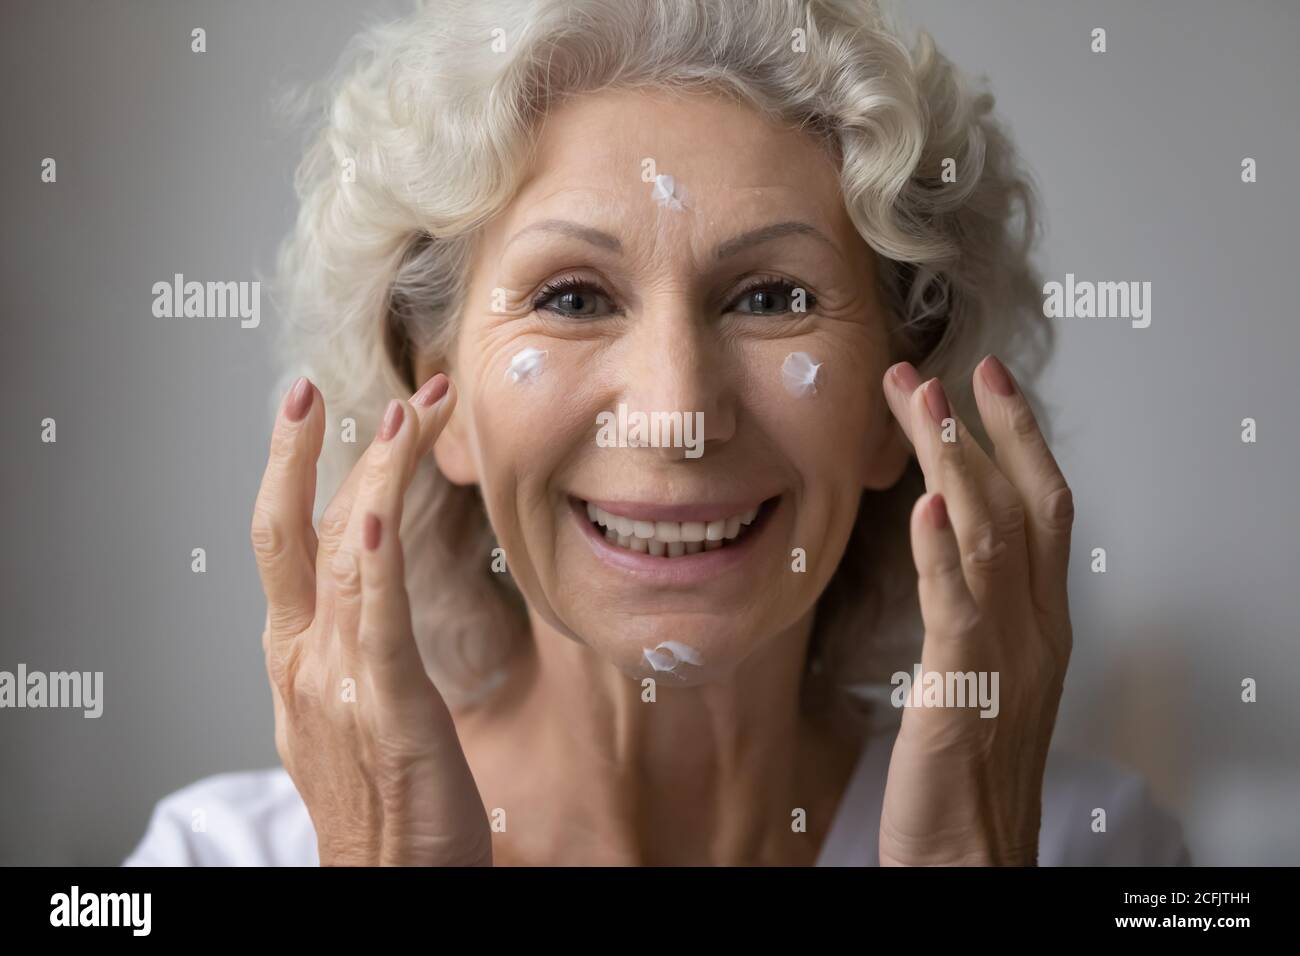 Head shot portrait smiling beautiful mature woman applying cream Stock Photo